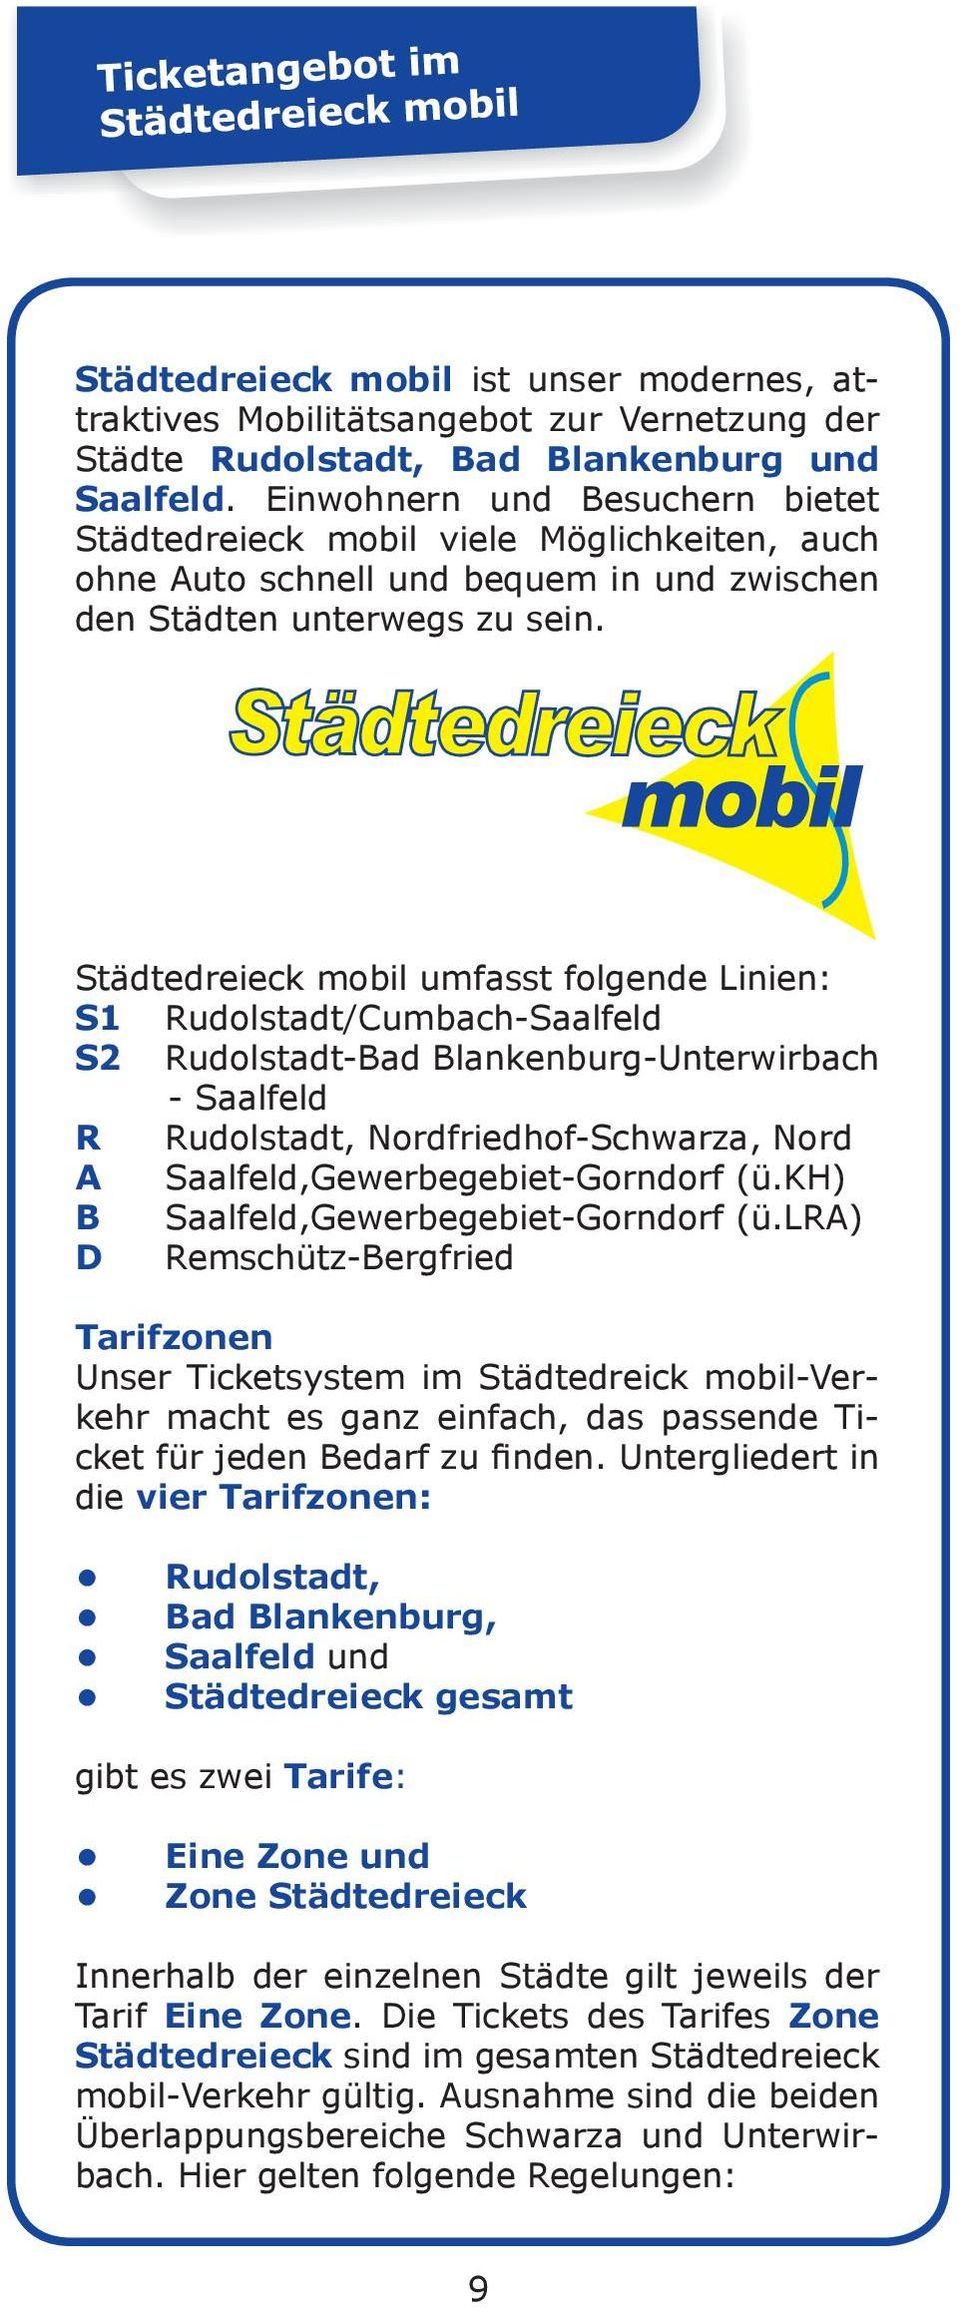 Städtedreieck mobil umfasst folgende Linien: S1 Rudolstadt/Cumbach-Saalfeld S2 Rudolstadt-Bad Blankenburg-Unterwirbach - Saalfeld R Rudolstadt, Nordfriedhof-Schwarza, Nord A